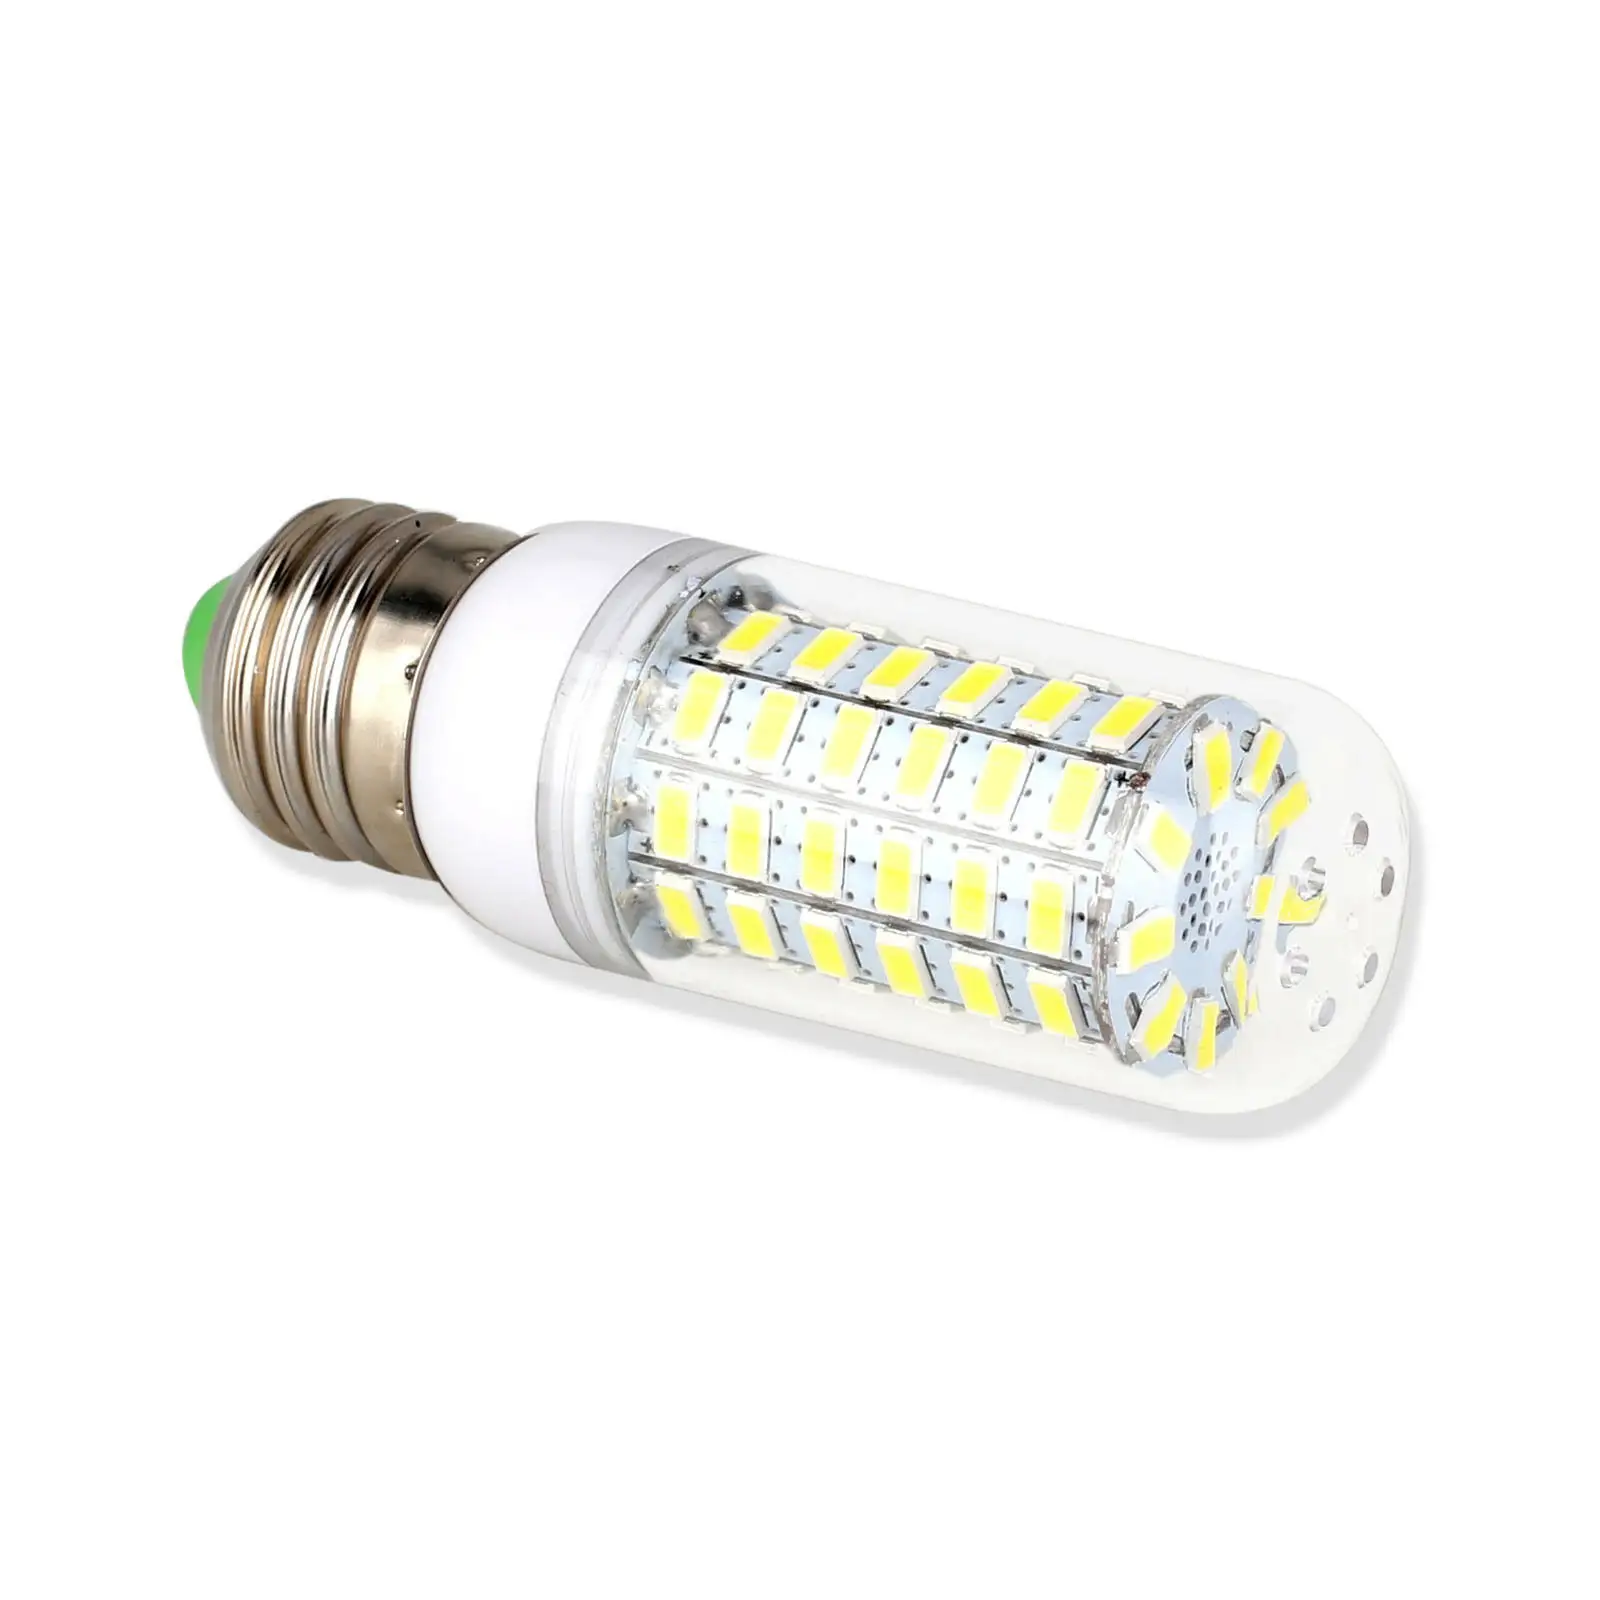 72 LED Corn Bulb E27 E14 B22 220V LED Lamp 5730 SMD Light lighting Bulbs Lamp